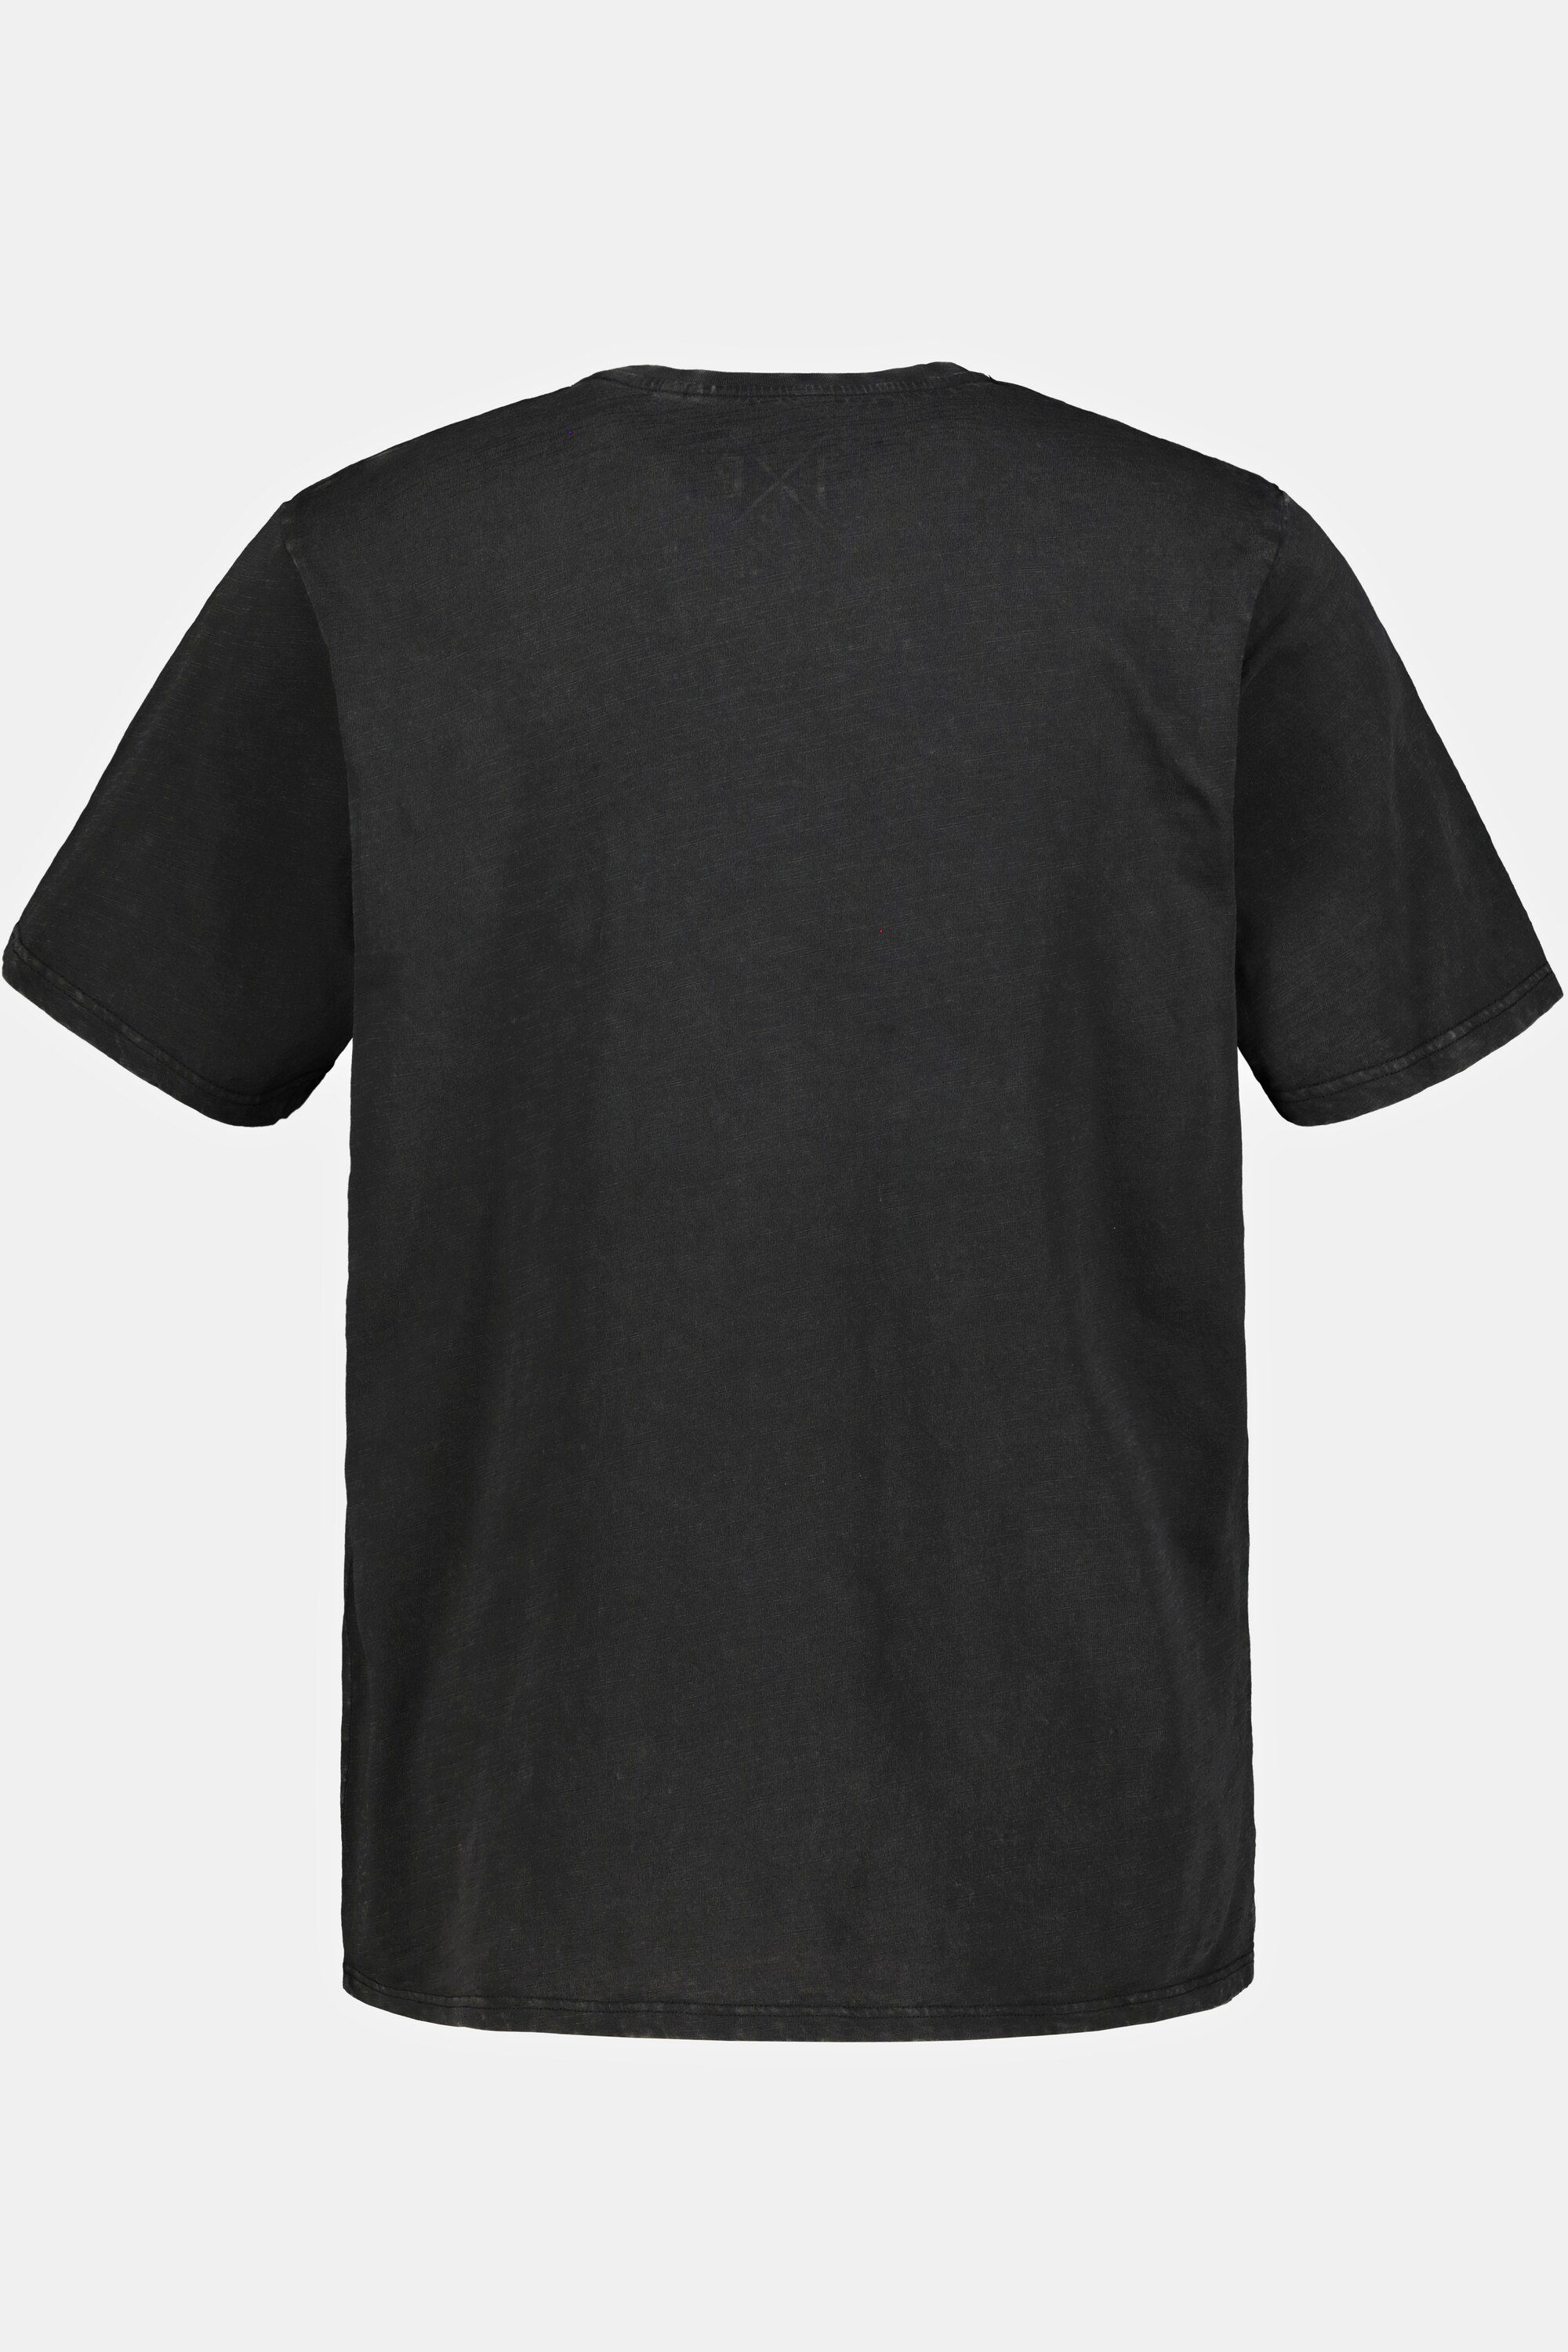 Look Halbarm Flammjersey Vintage schwarz T-Shirt JP1880 T-Shirt